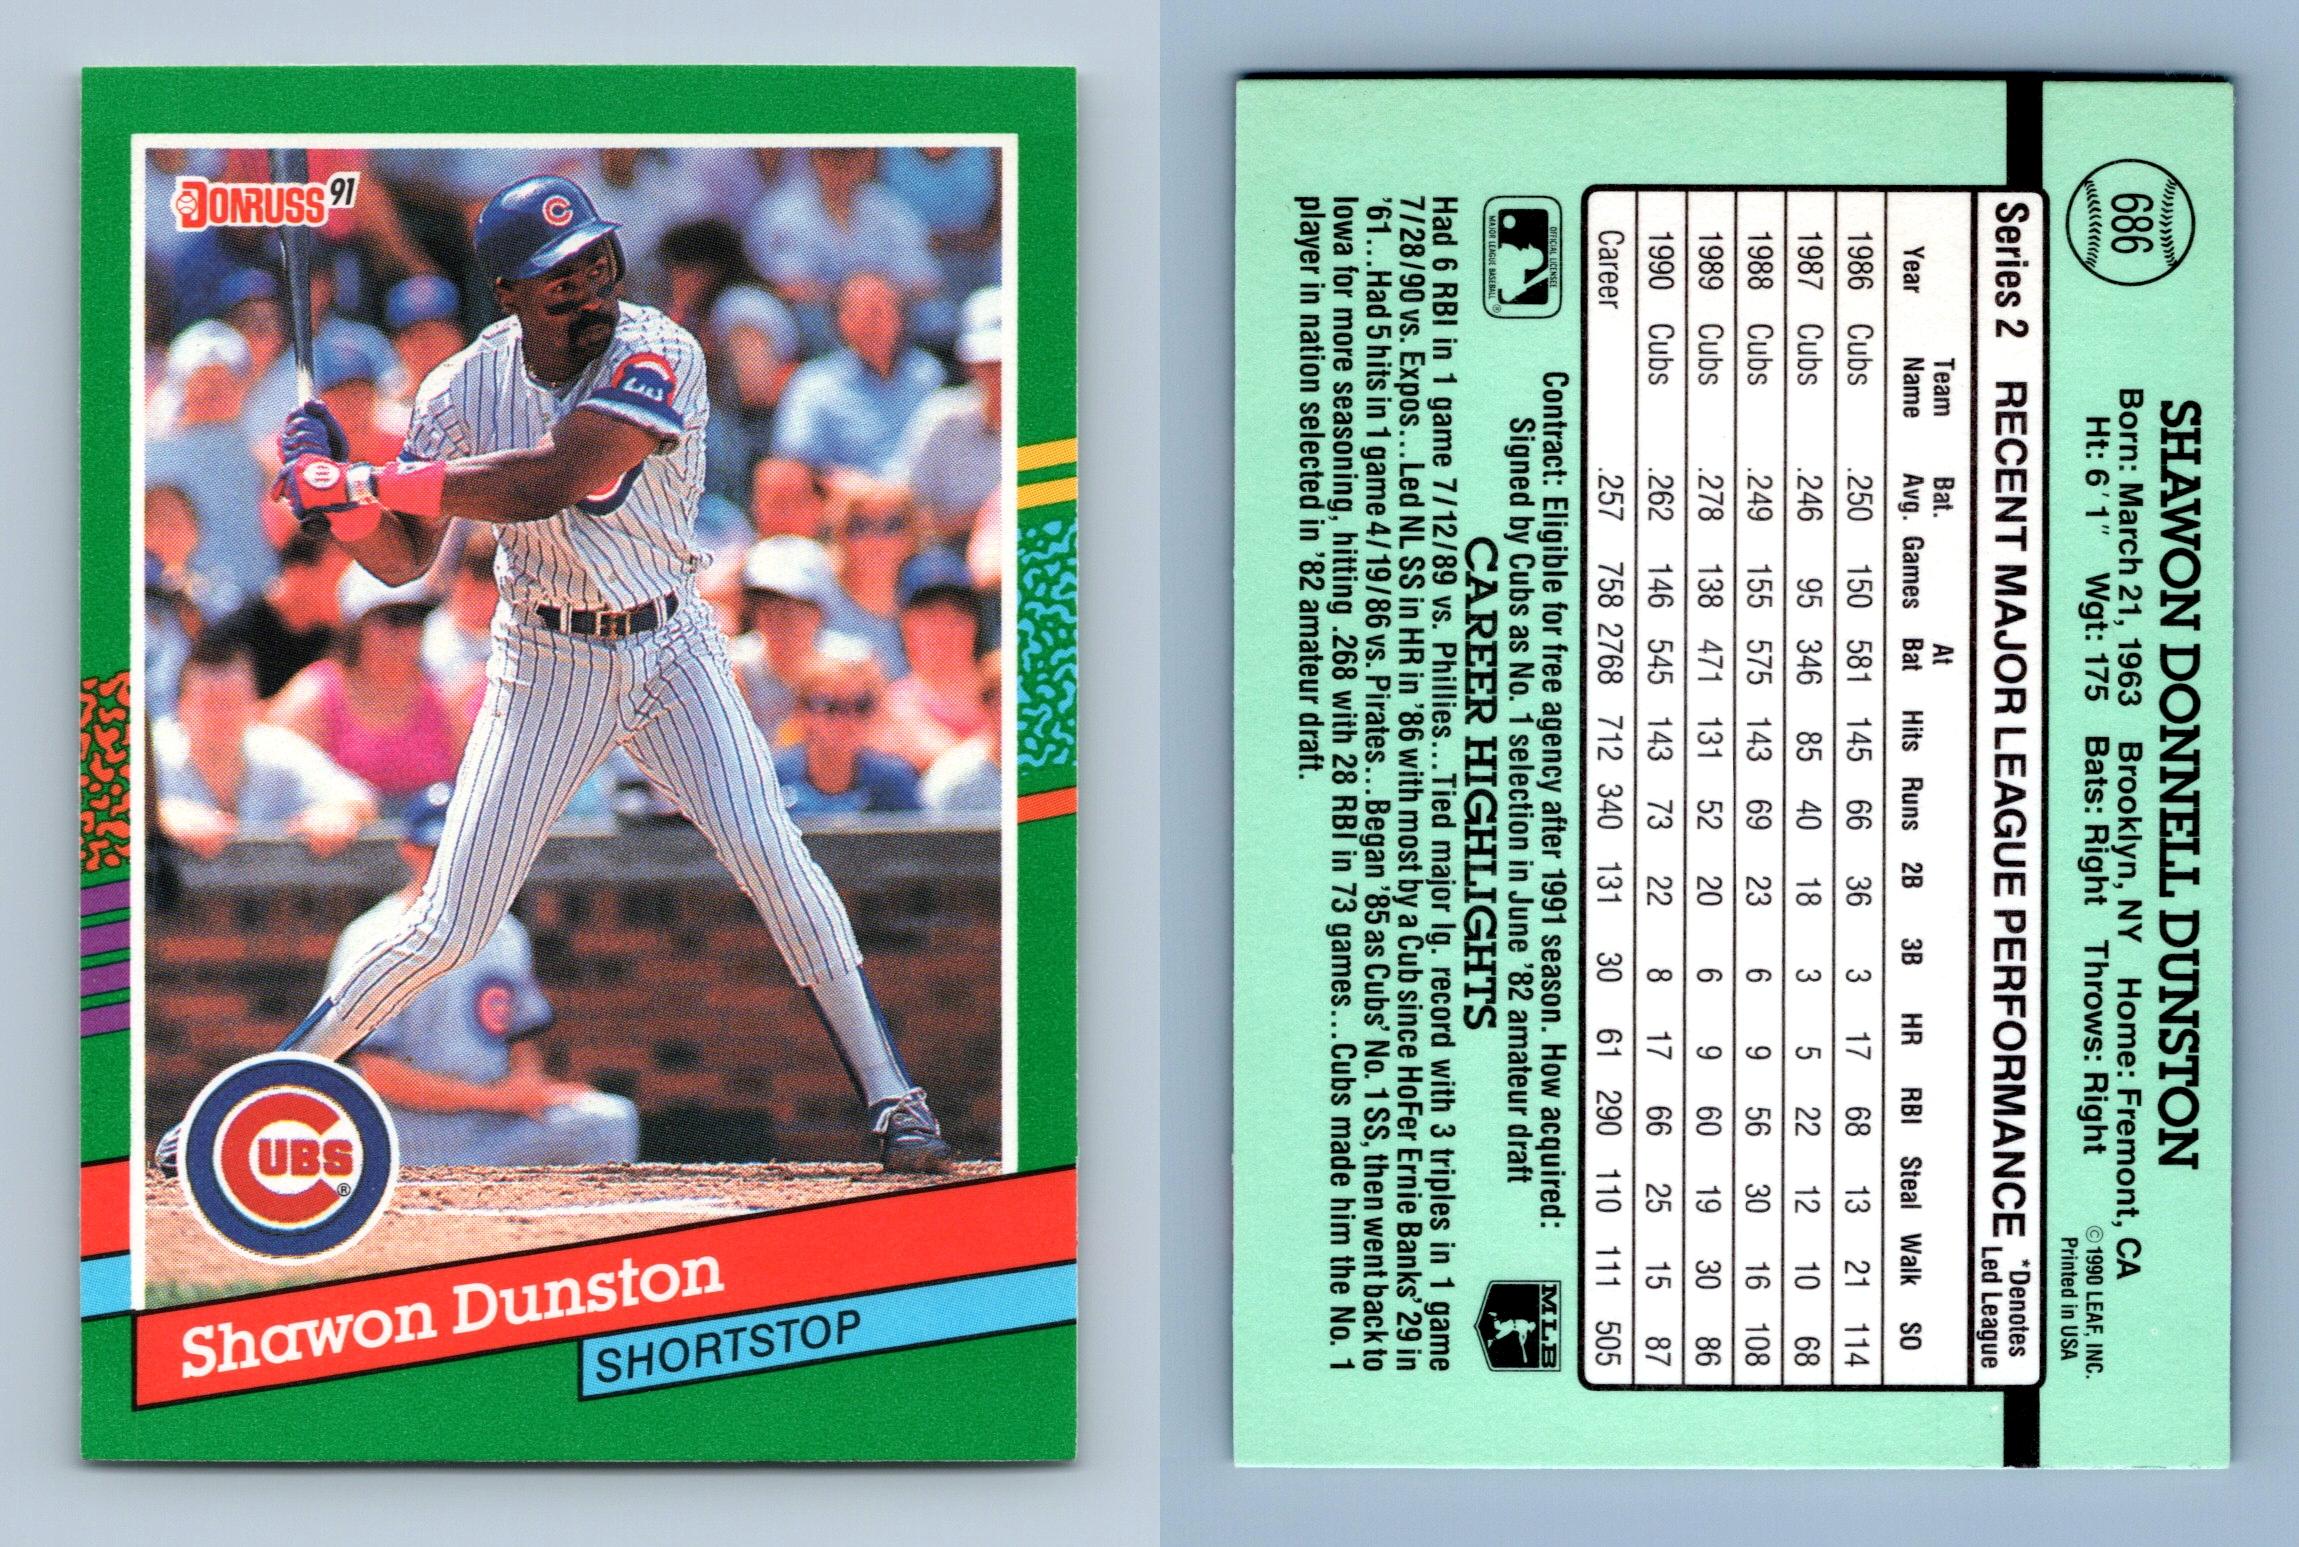 Shawon Dunston Signed 1989 Topps Baseball Card - Chicago Cubs